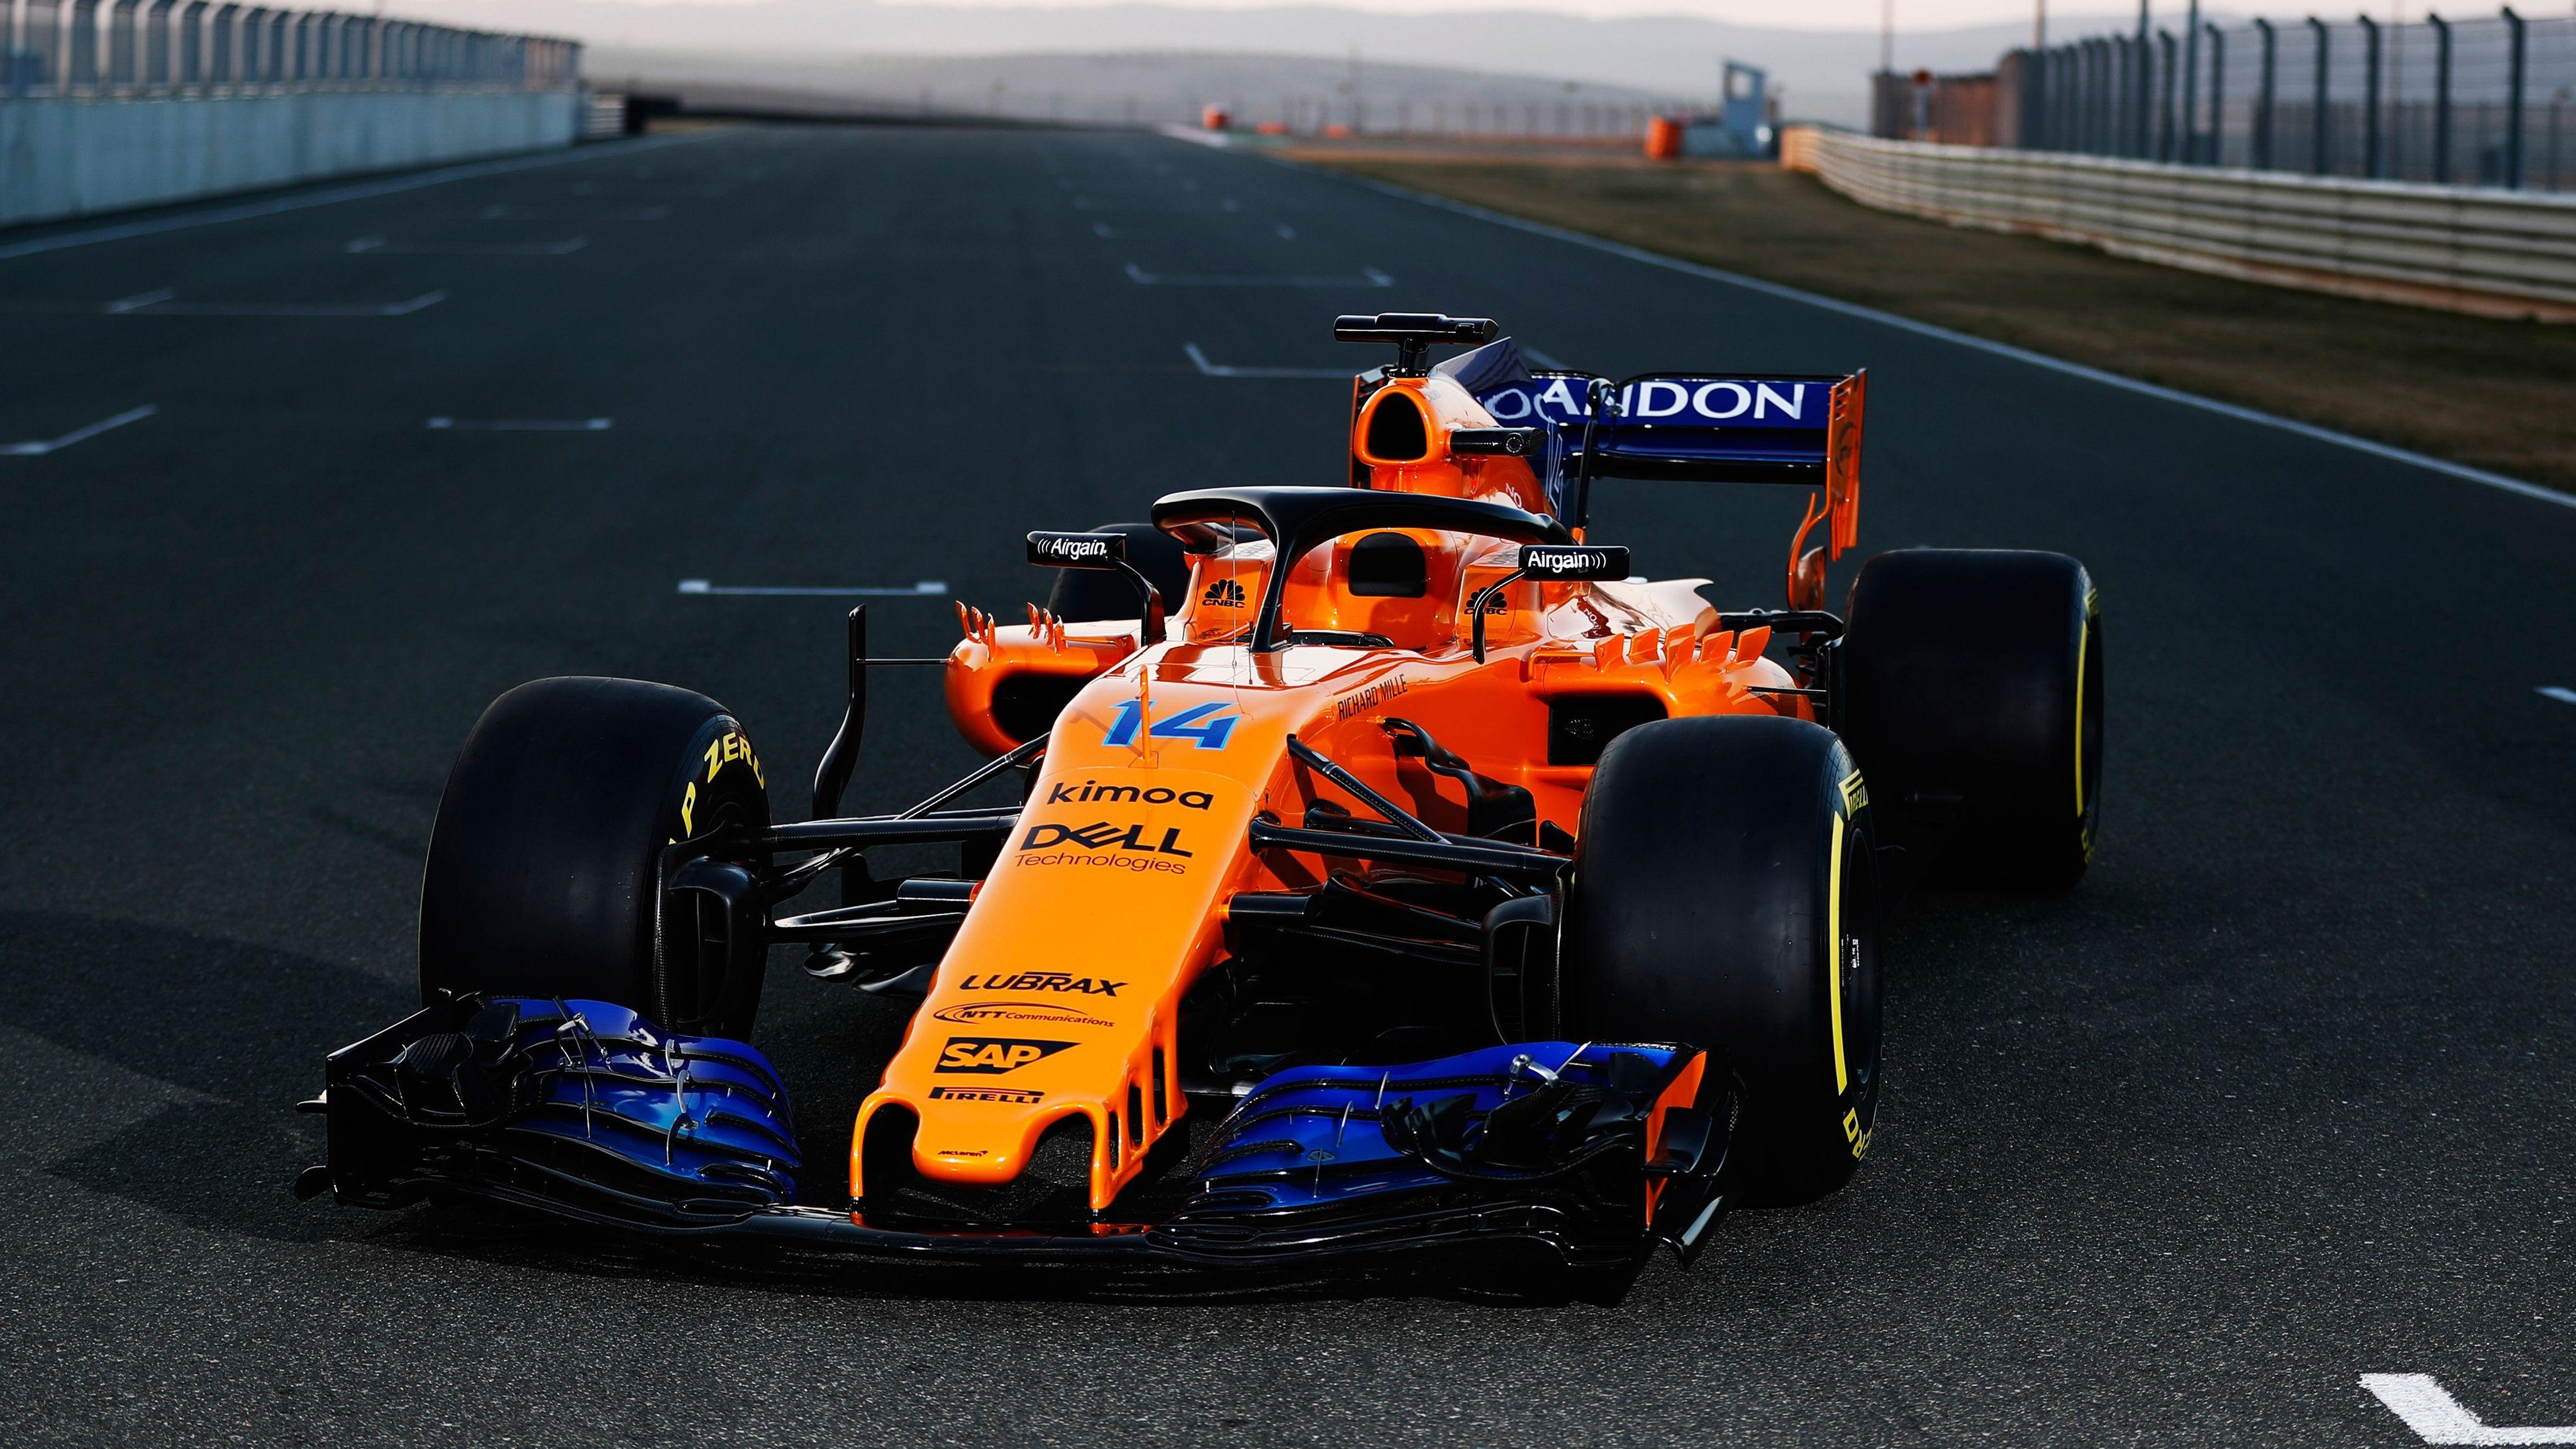 McLaren Formula 1 Wallpapers Top Free McLaren Formula 1 Backgrounds